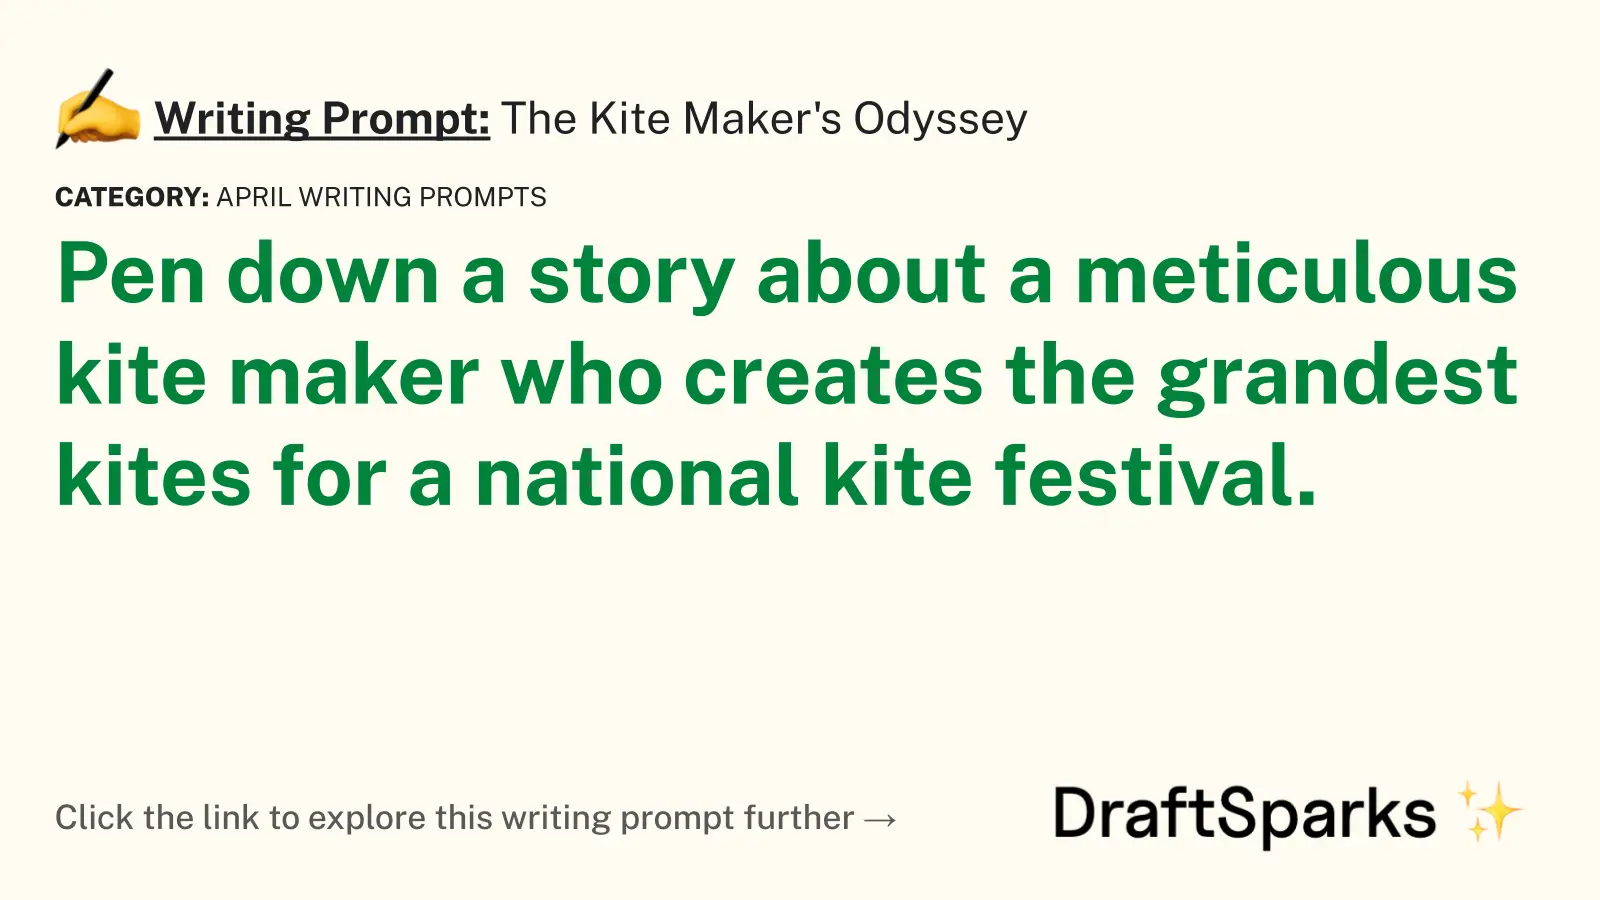 The Kite Maker’s Odyssey